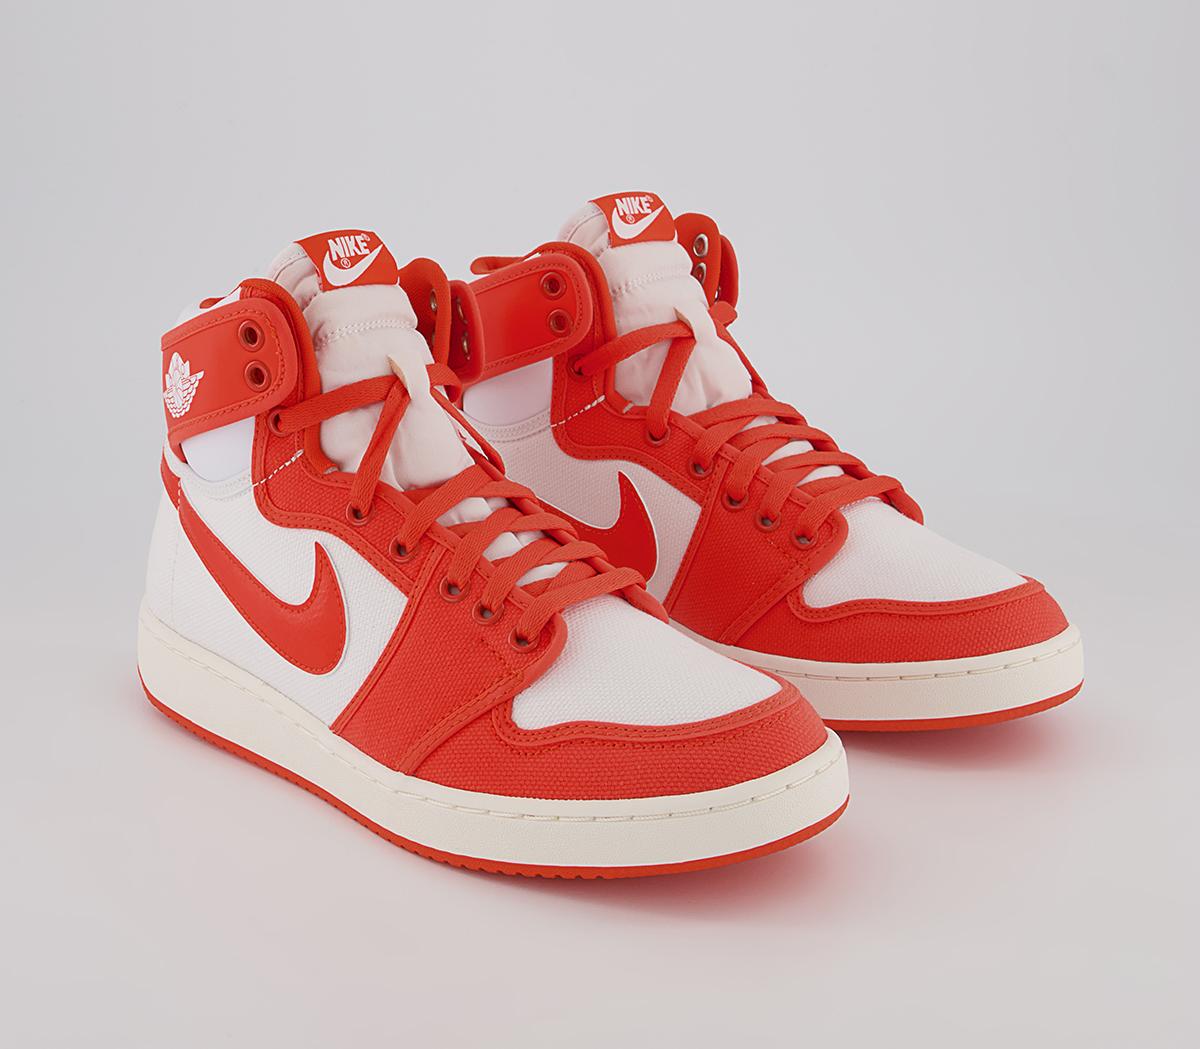 Jordan Air Jordan 1 KO High Rush Orange Whitesail - Basketball Shoes